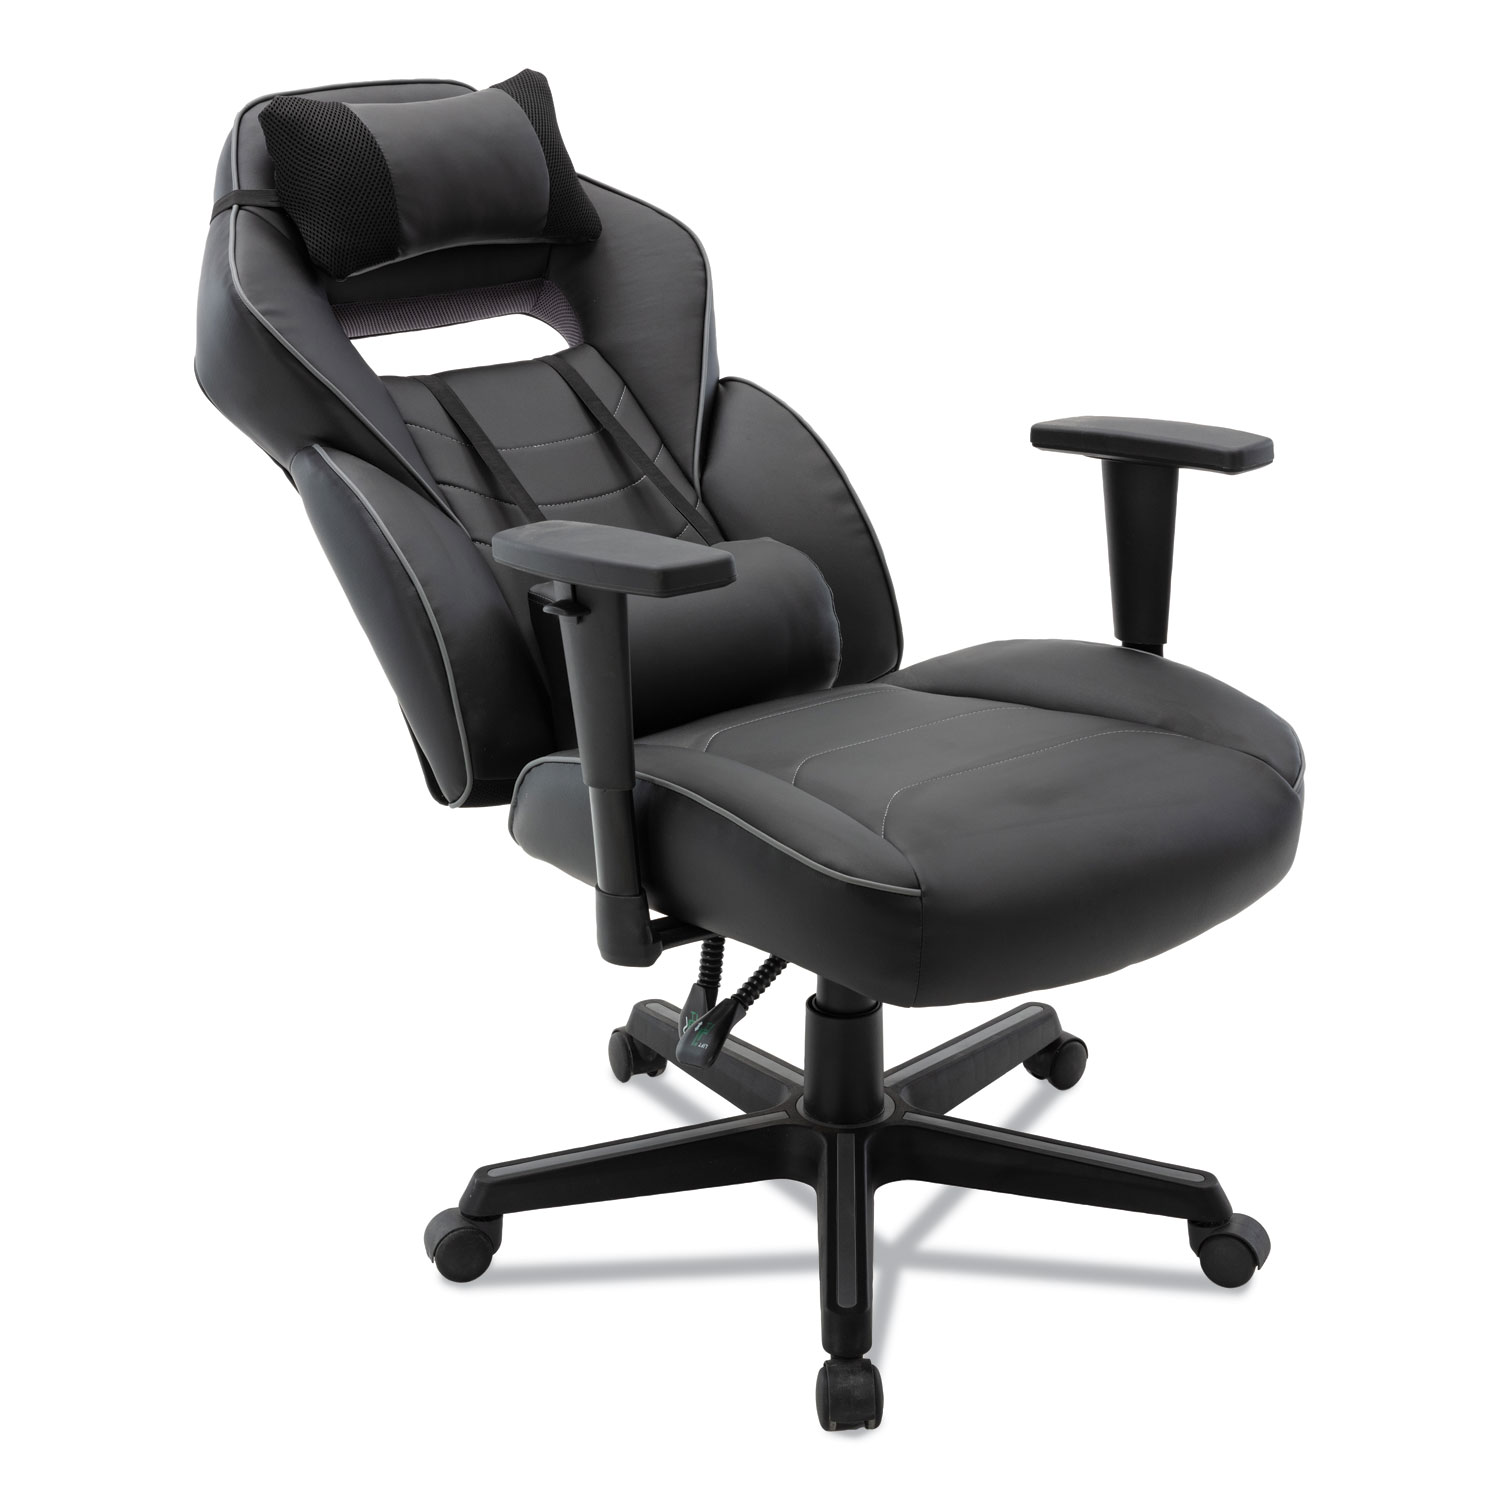 Racing Style Ergonomic Gaming Chair by Alera® ALEGM4146